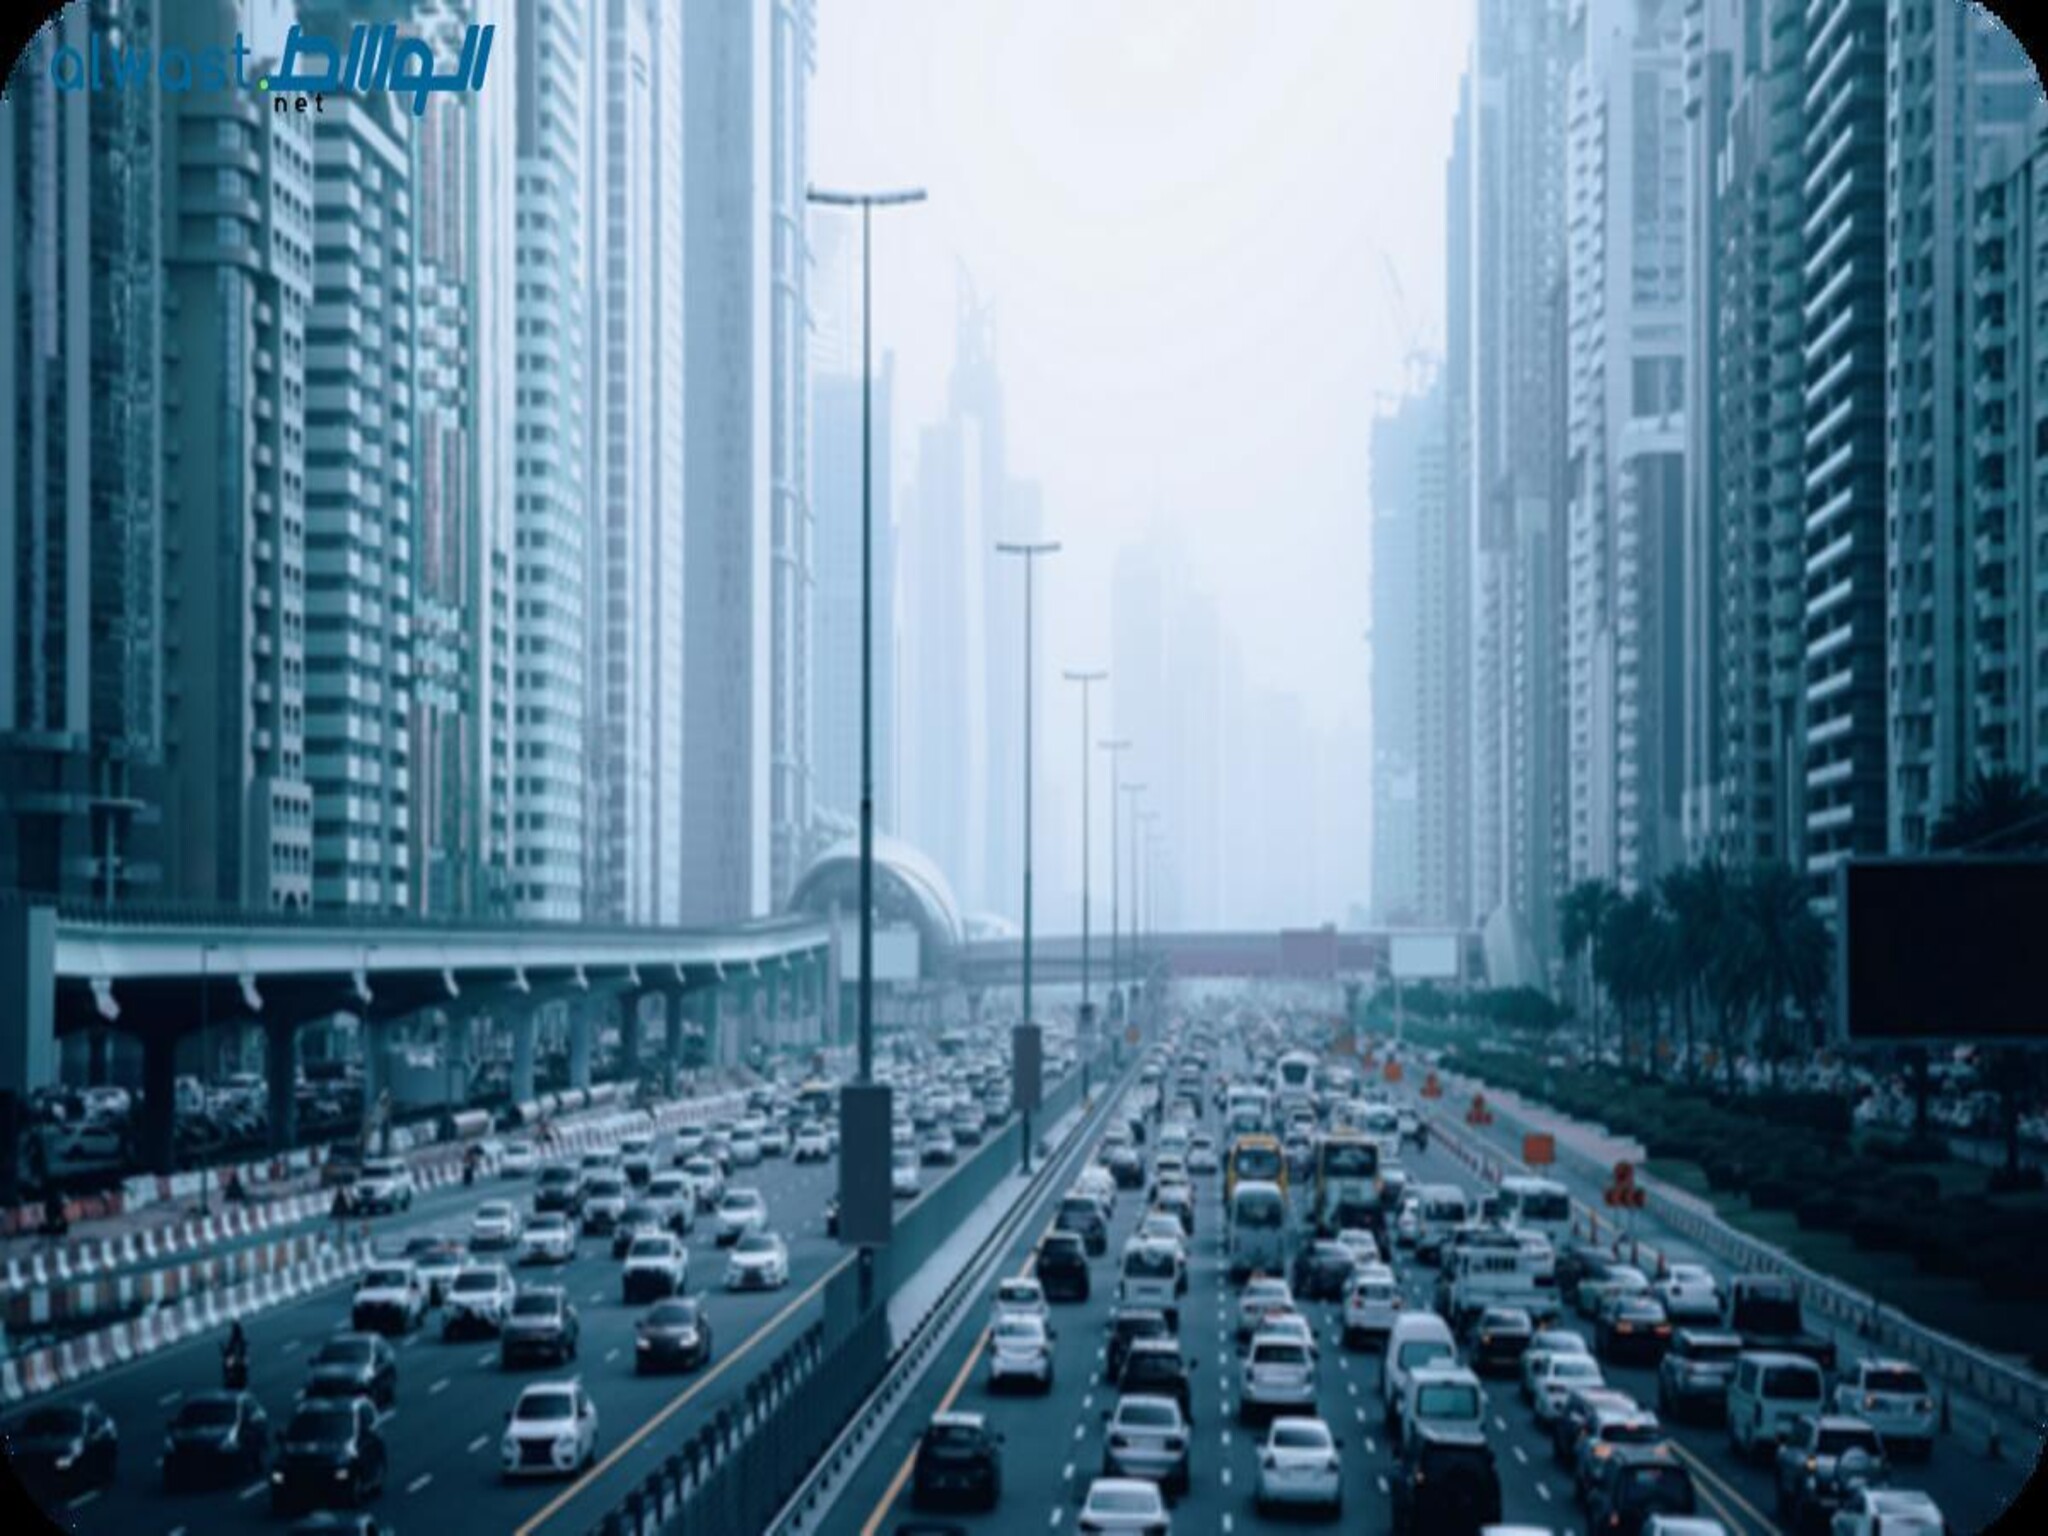 Dubai: Anticipated heavy traffic towards the airport this Eid-al-Adha weekend